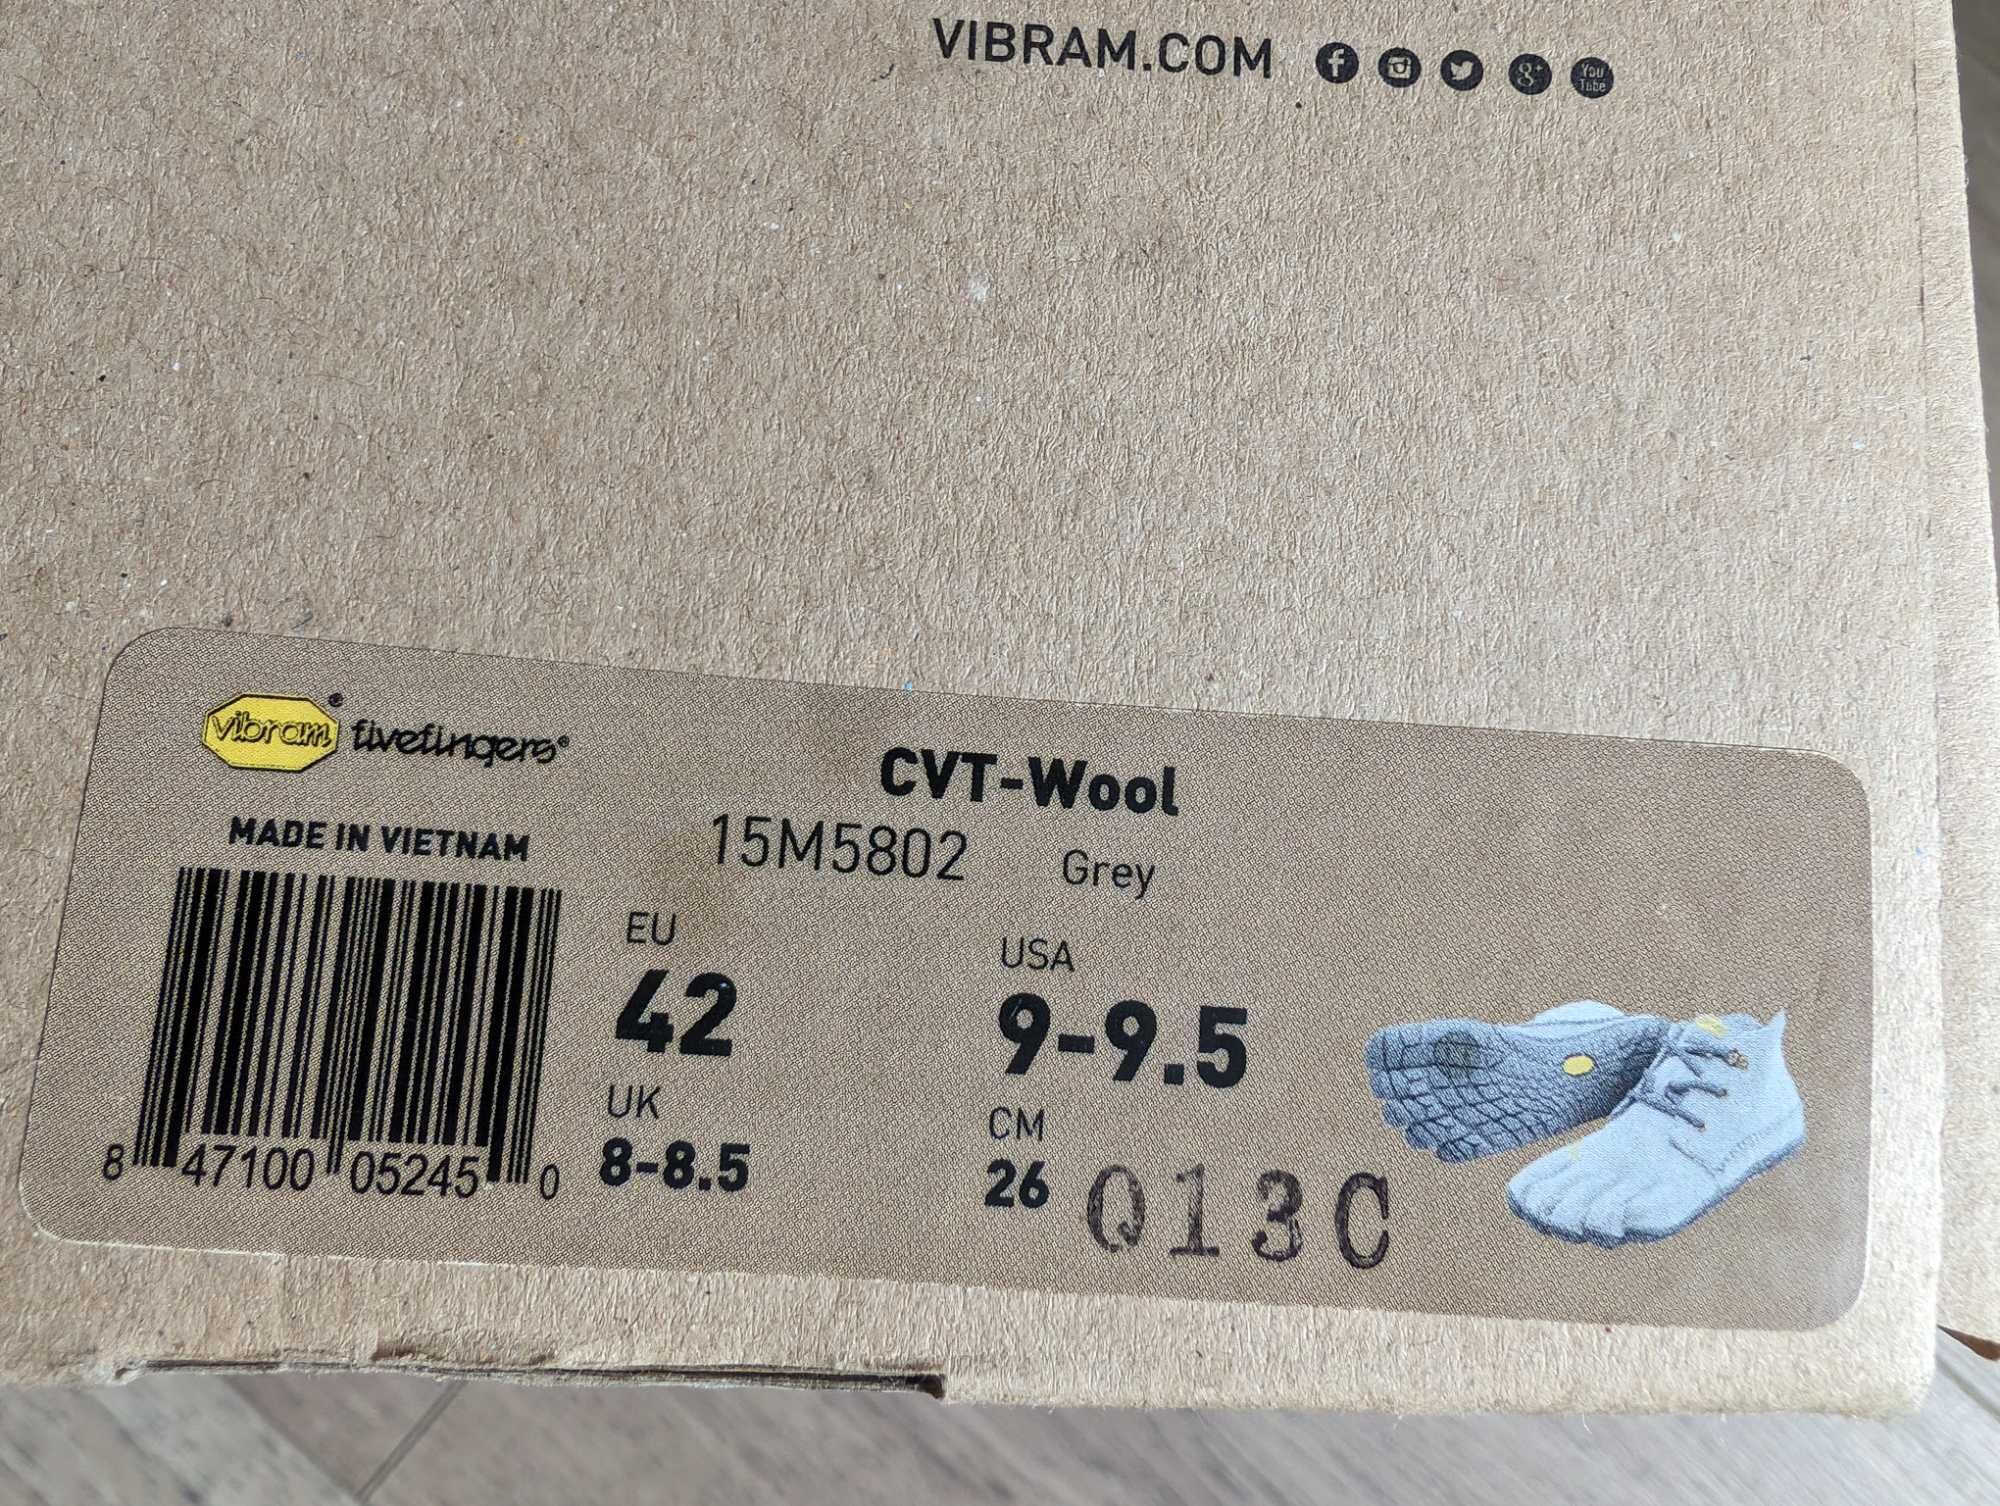 Vibram FiveFingers CVT-Wool ghete marimea 42 noi